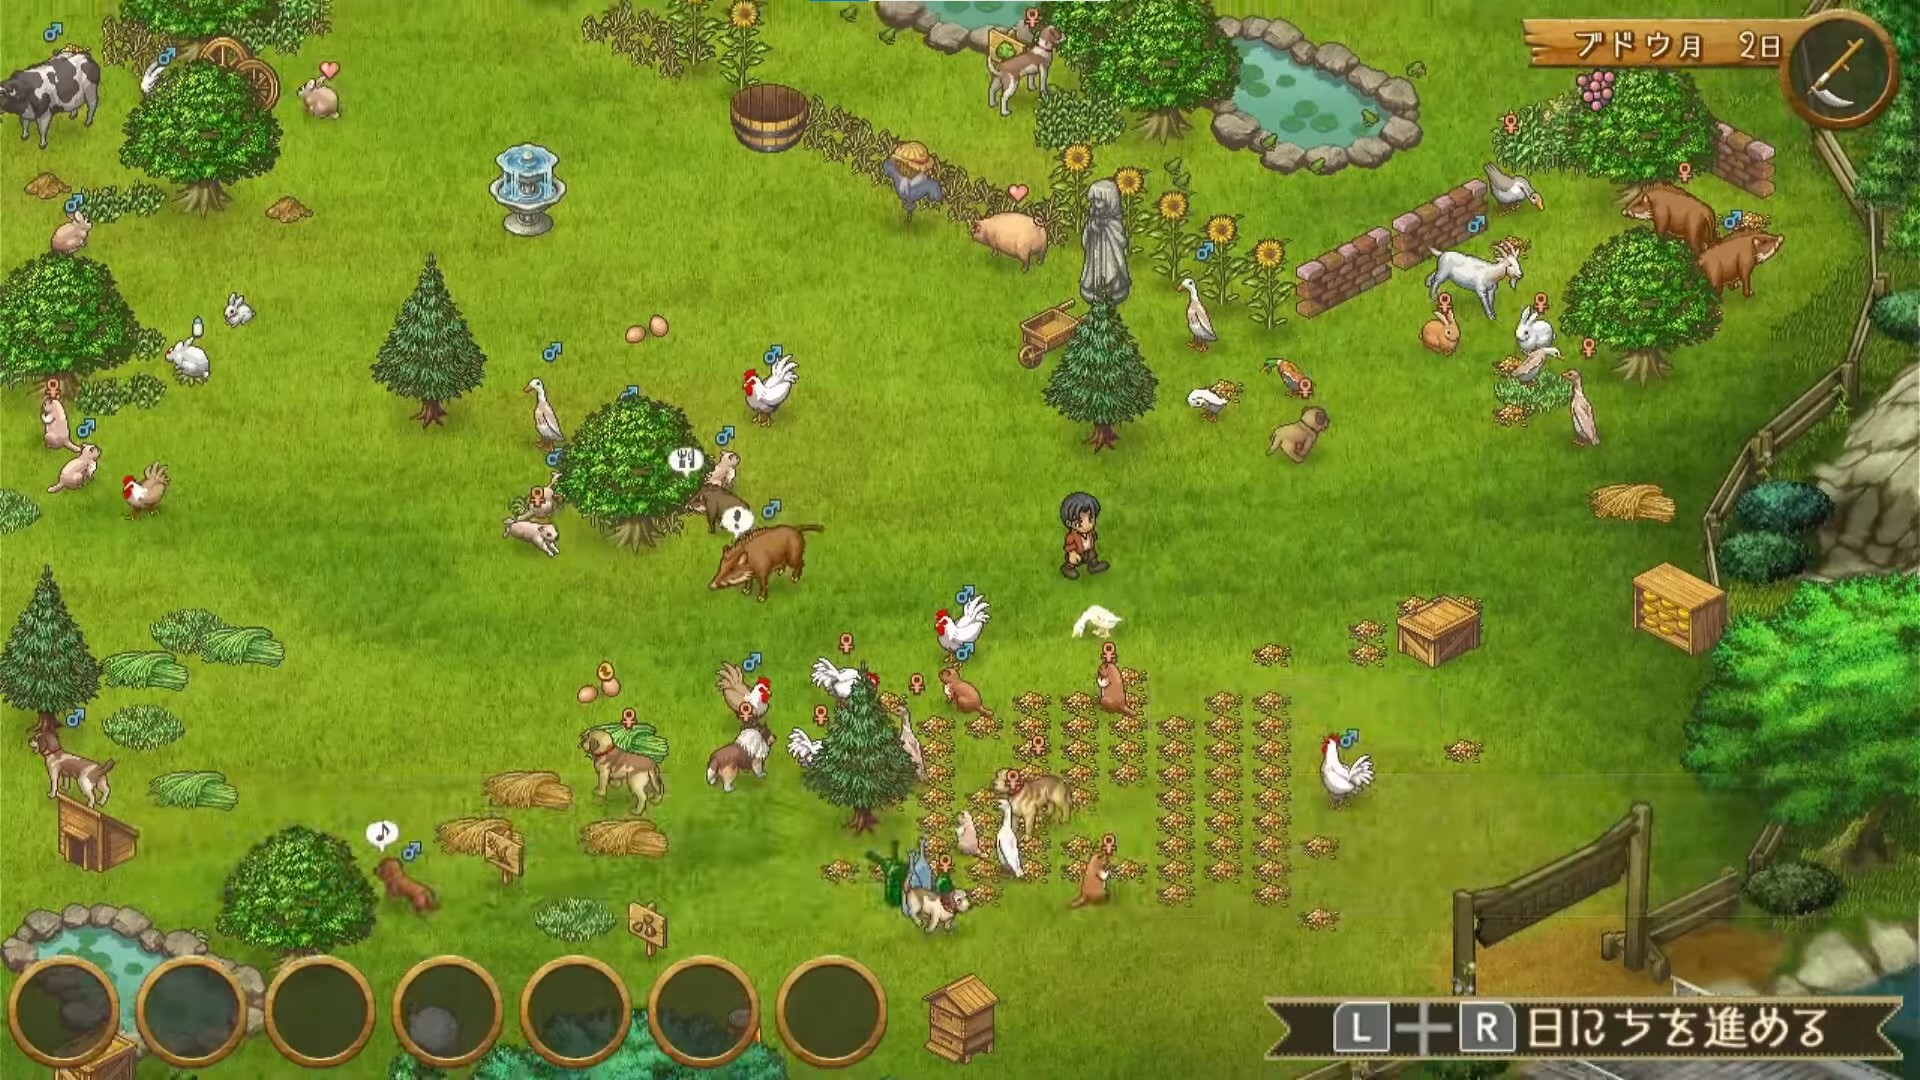 Ranch Simulator [PC] Multiplayer Gameplay Trailer 